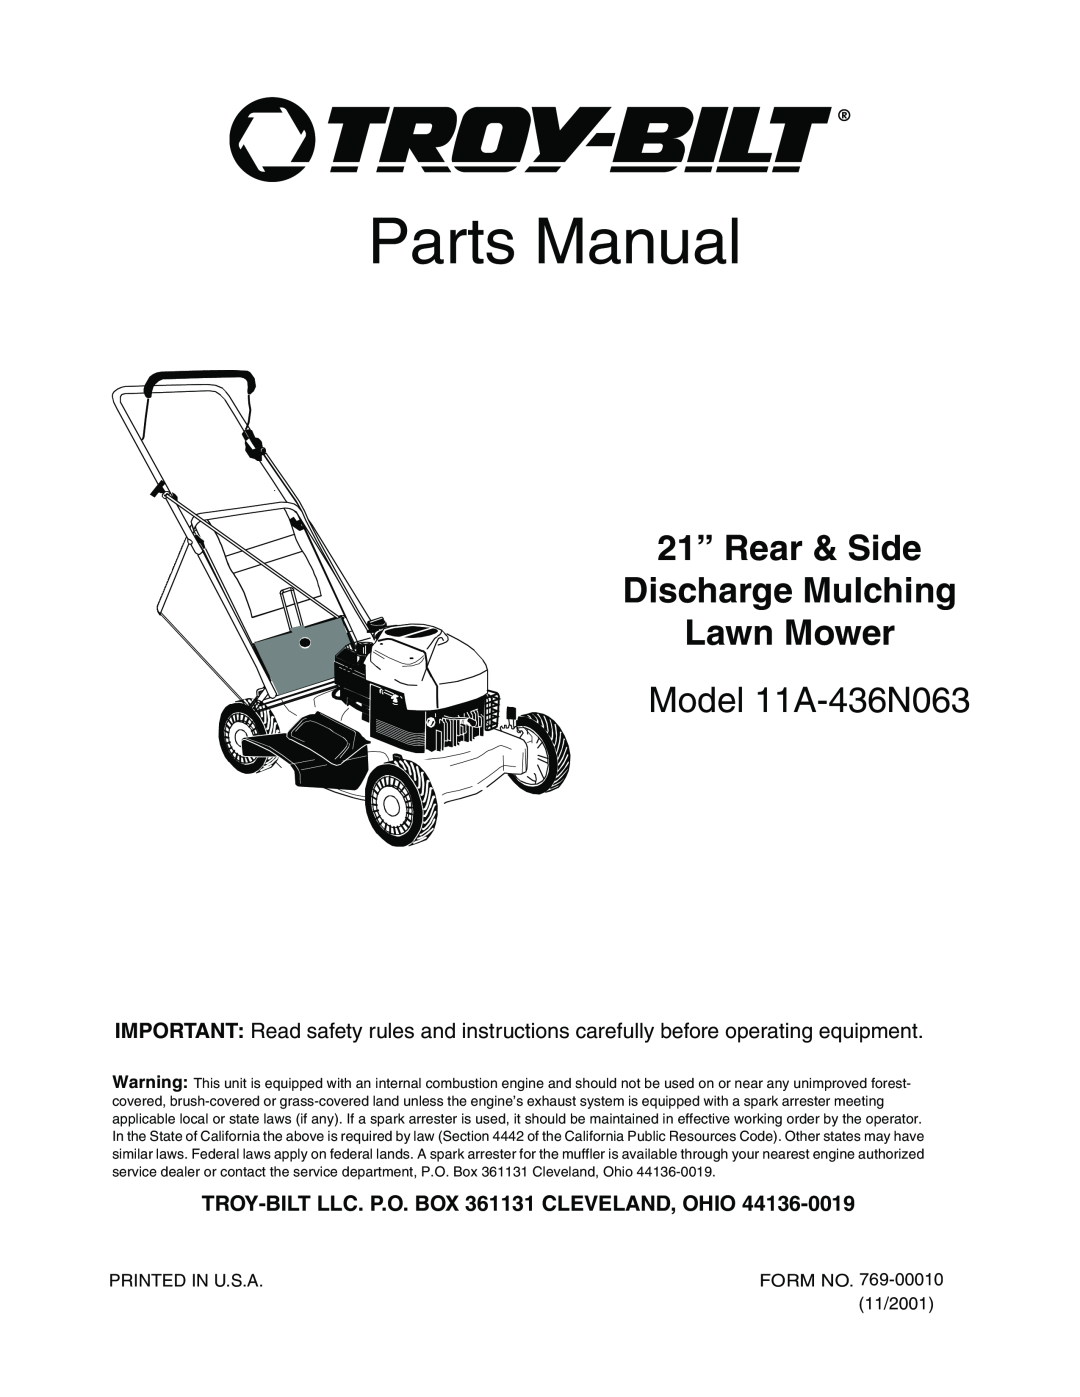 Troy-Bilt manual Parts Manual, 21” Rear & Side Discharge Mulching Lawn Mower, Model 11A-436N063, FORM NO. 769-00010.fm 